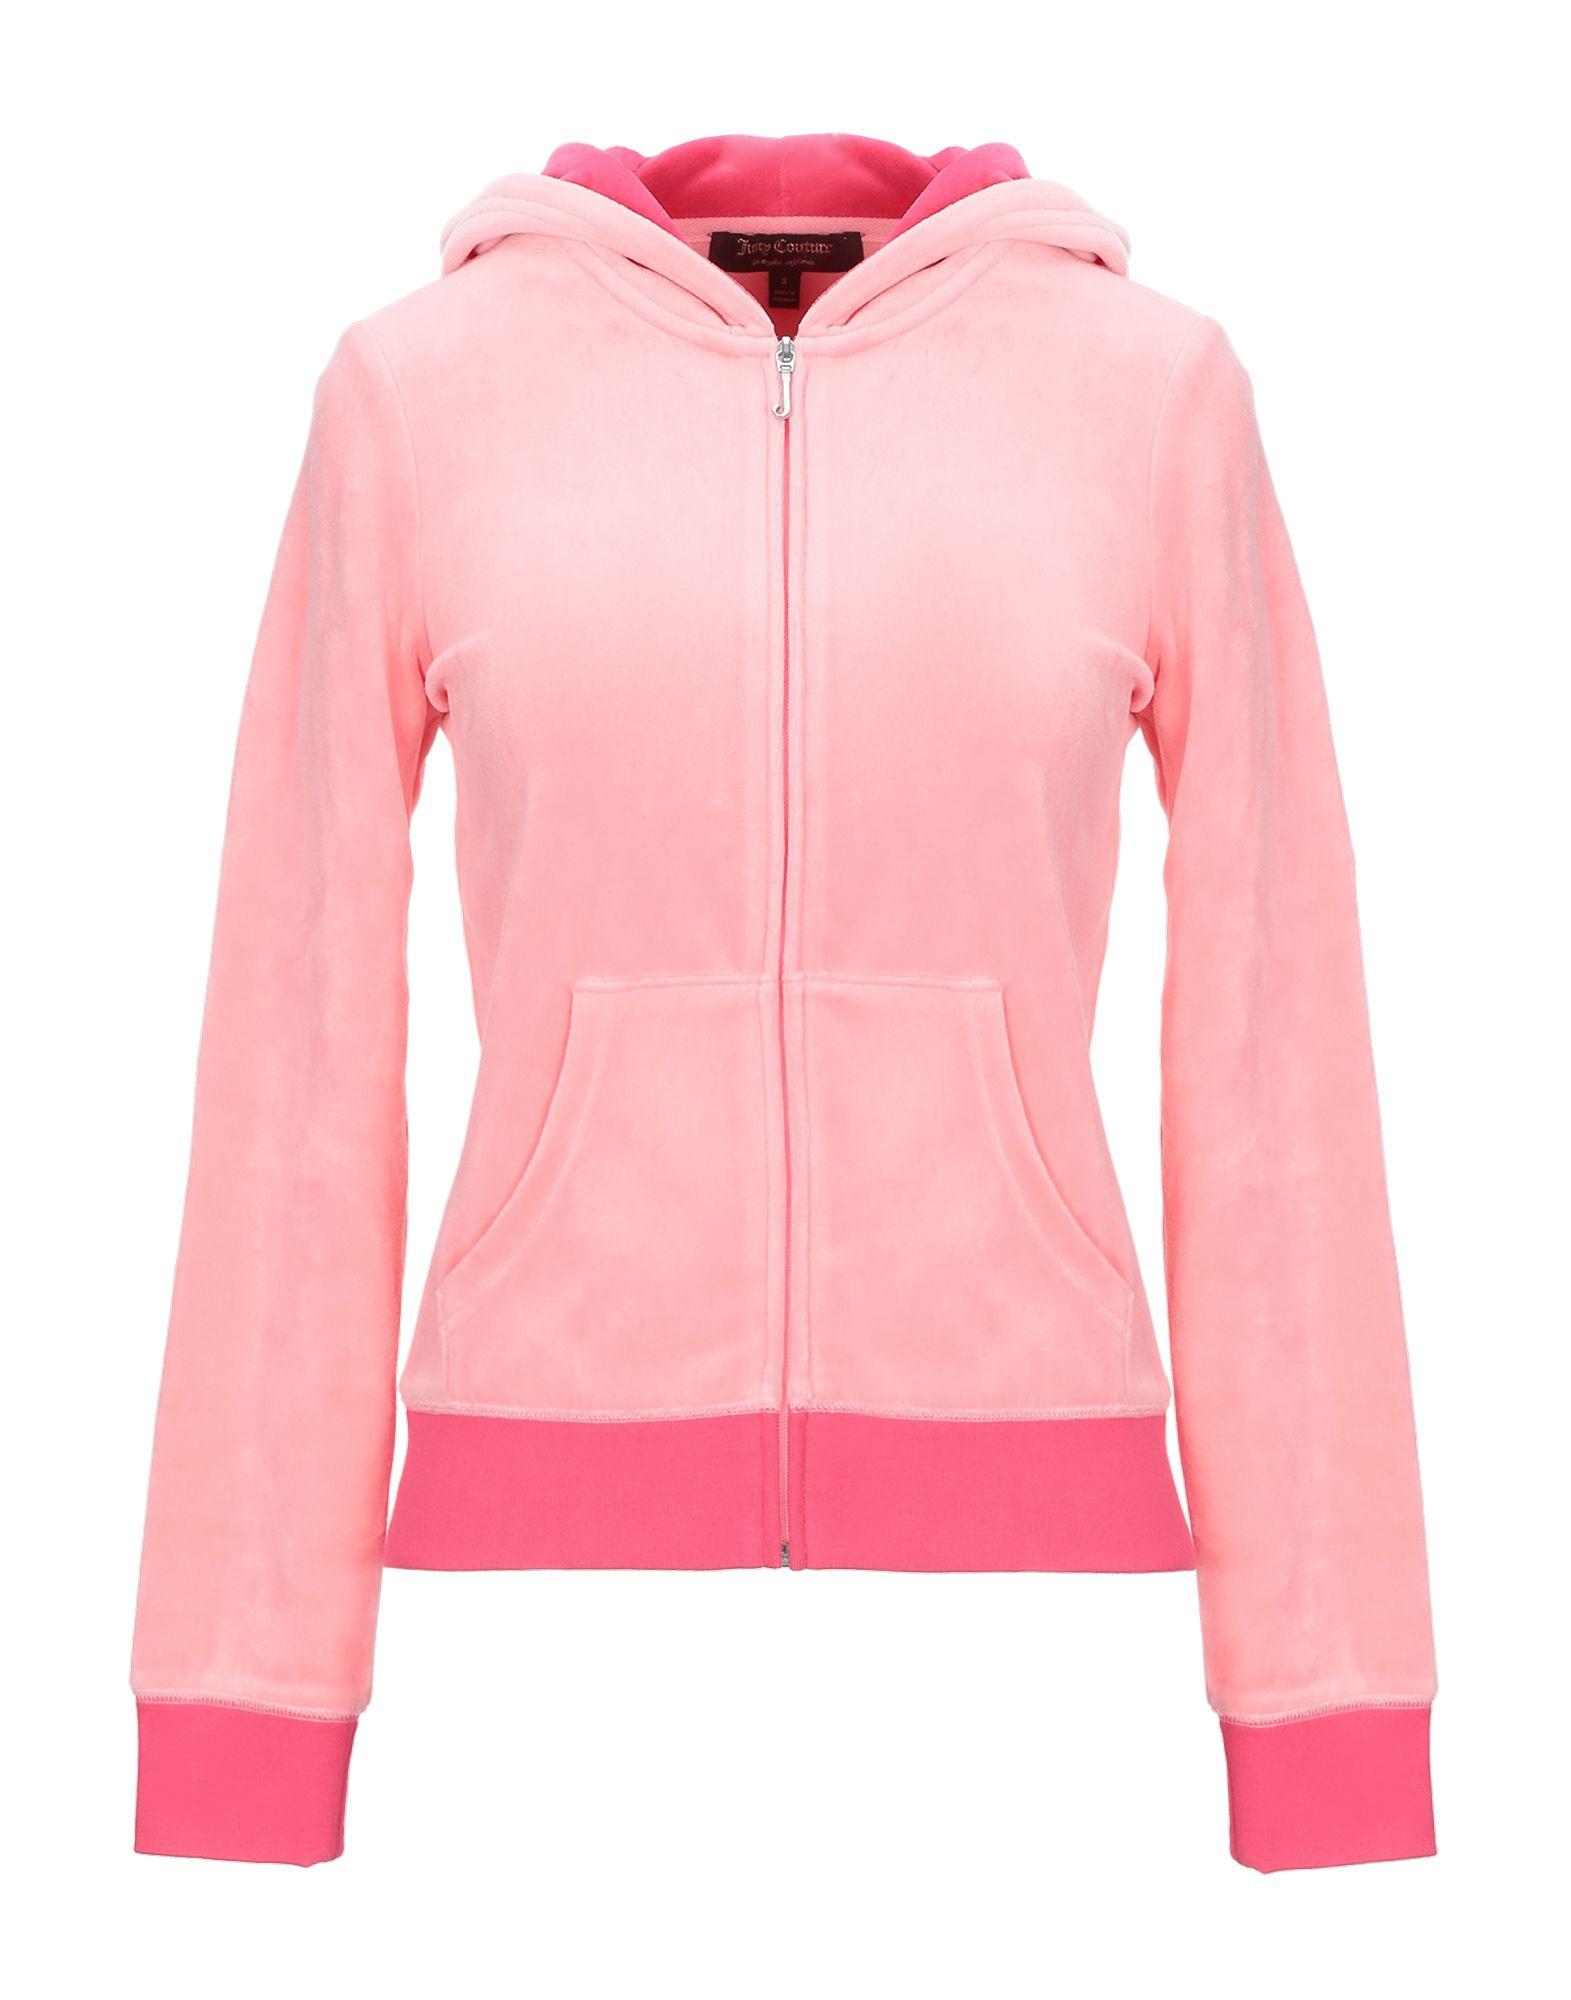 Juicy Couture Sweatshirt in Pink - Lyst